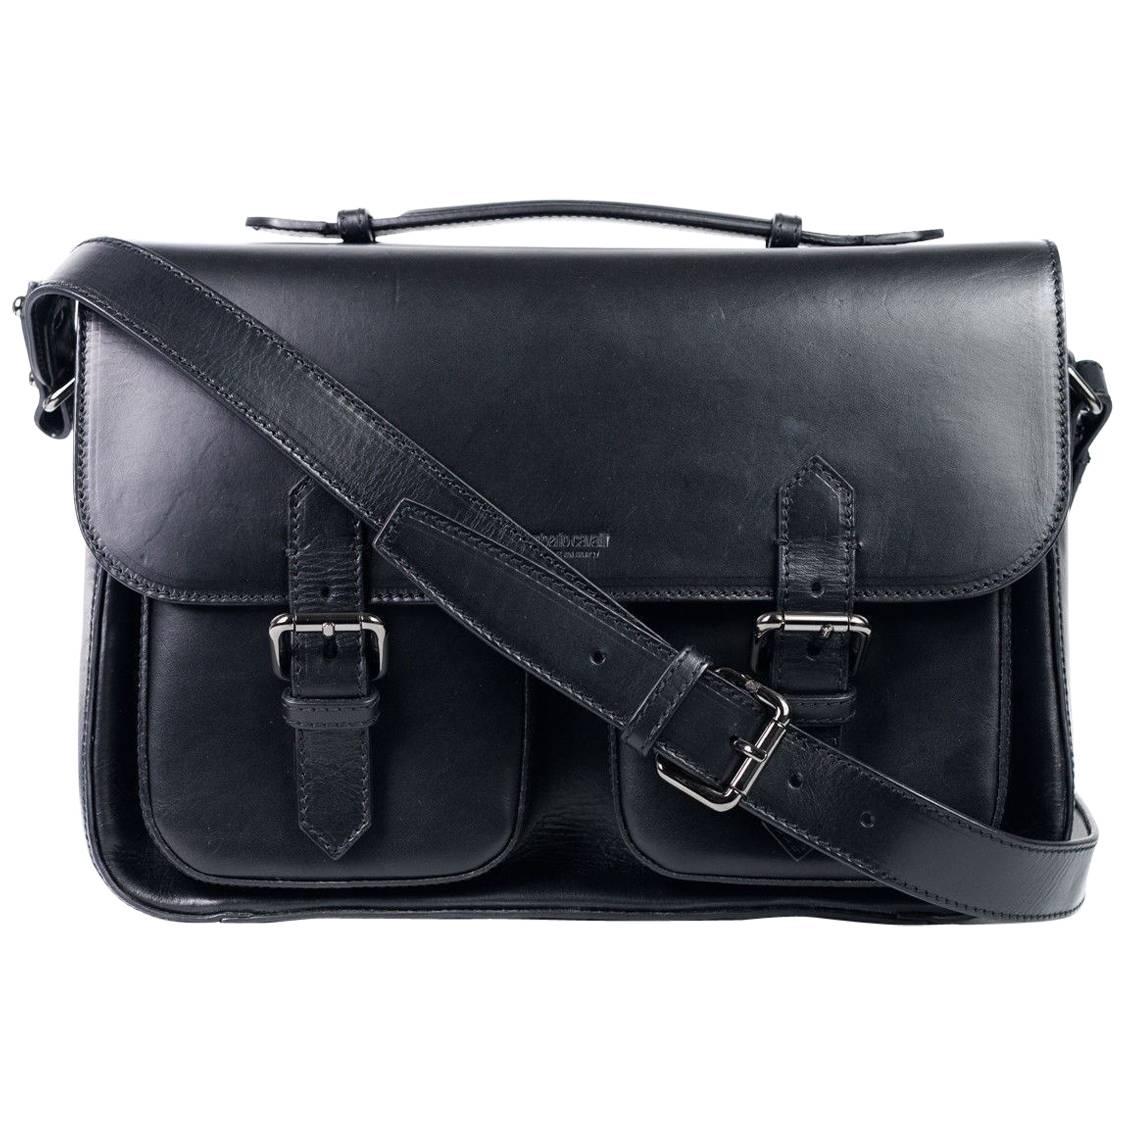 Roberto Cavalli Black Smooth Leather Double Strap Satchel Shoulder Bag For Sale